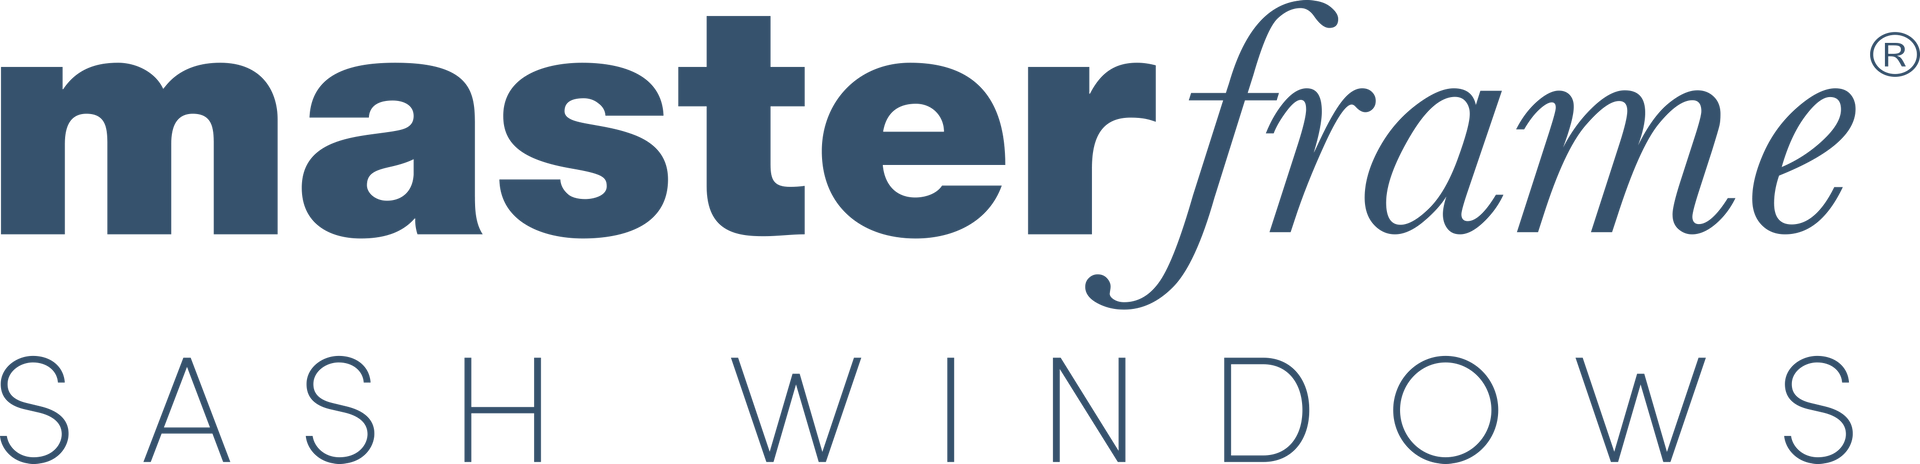 A blue and white logo for master frame sash windows